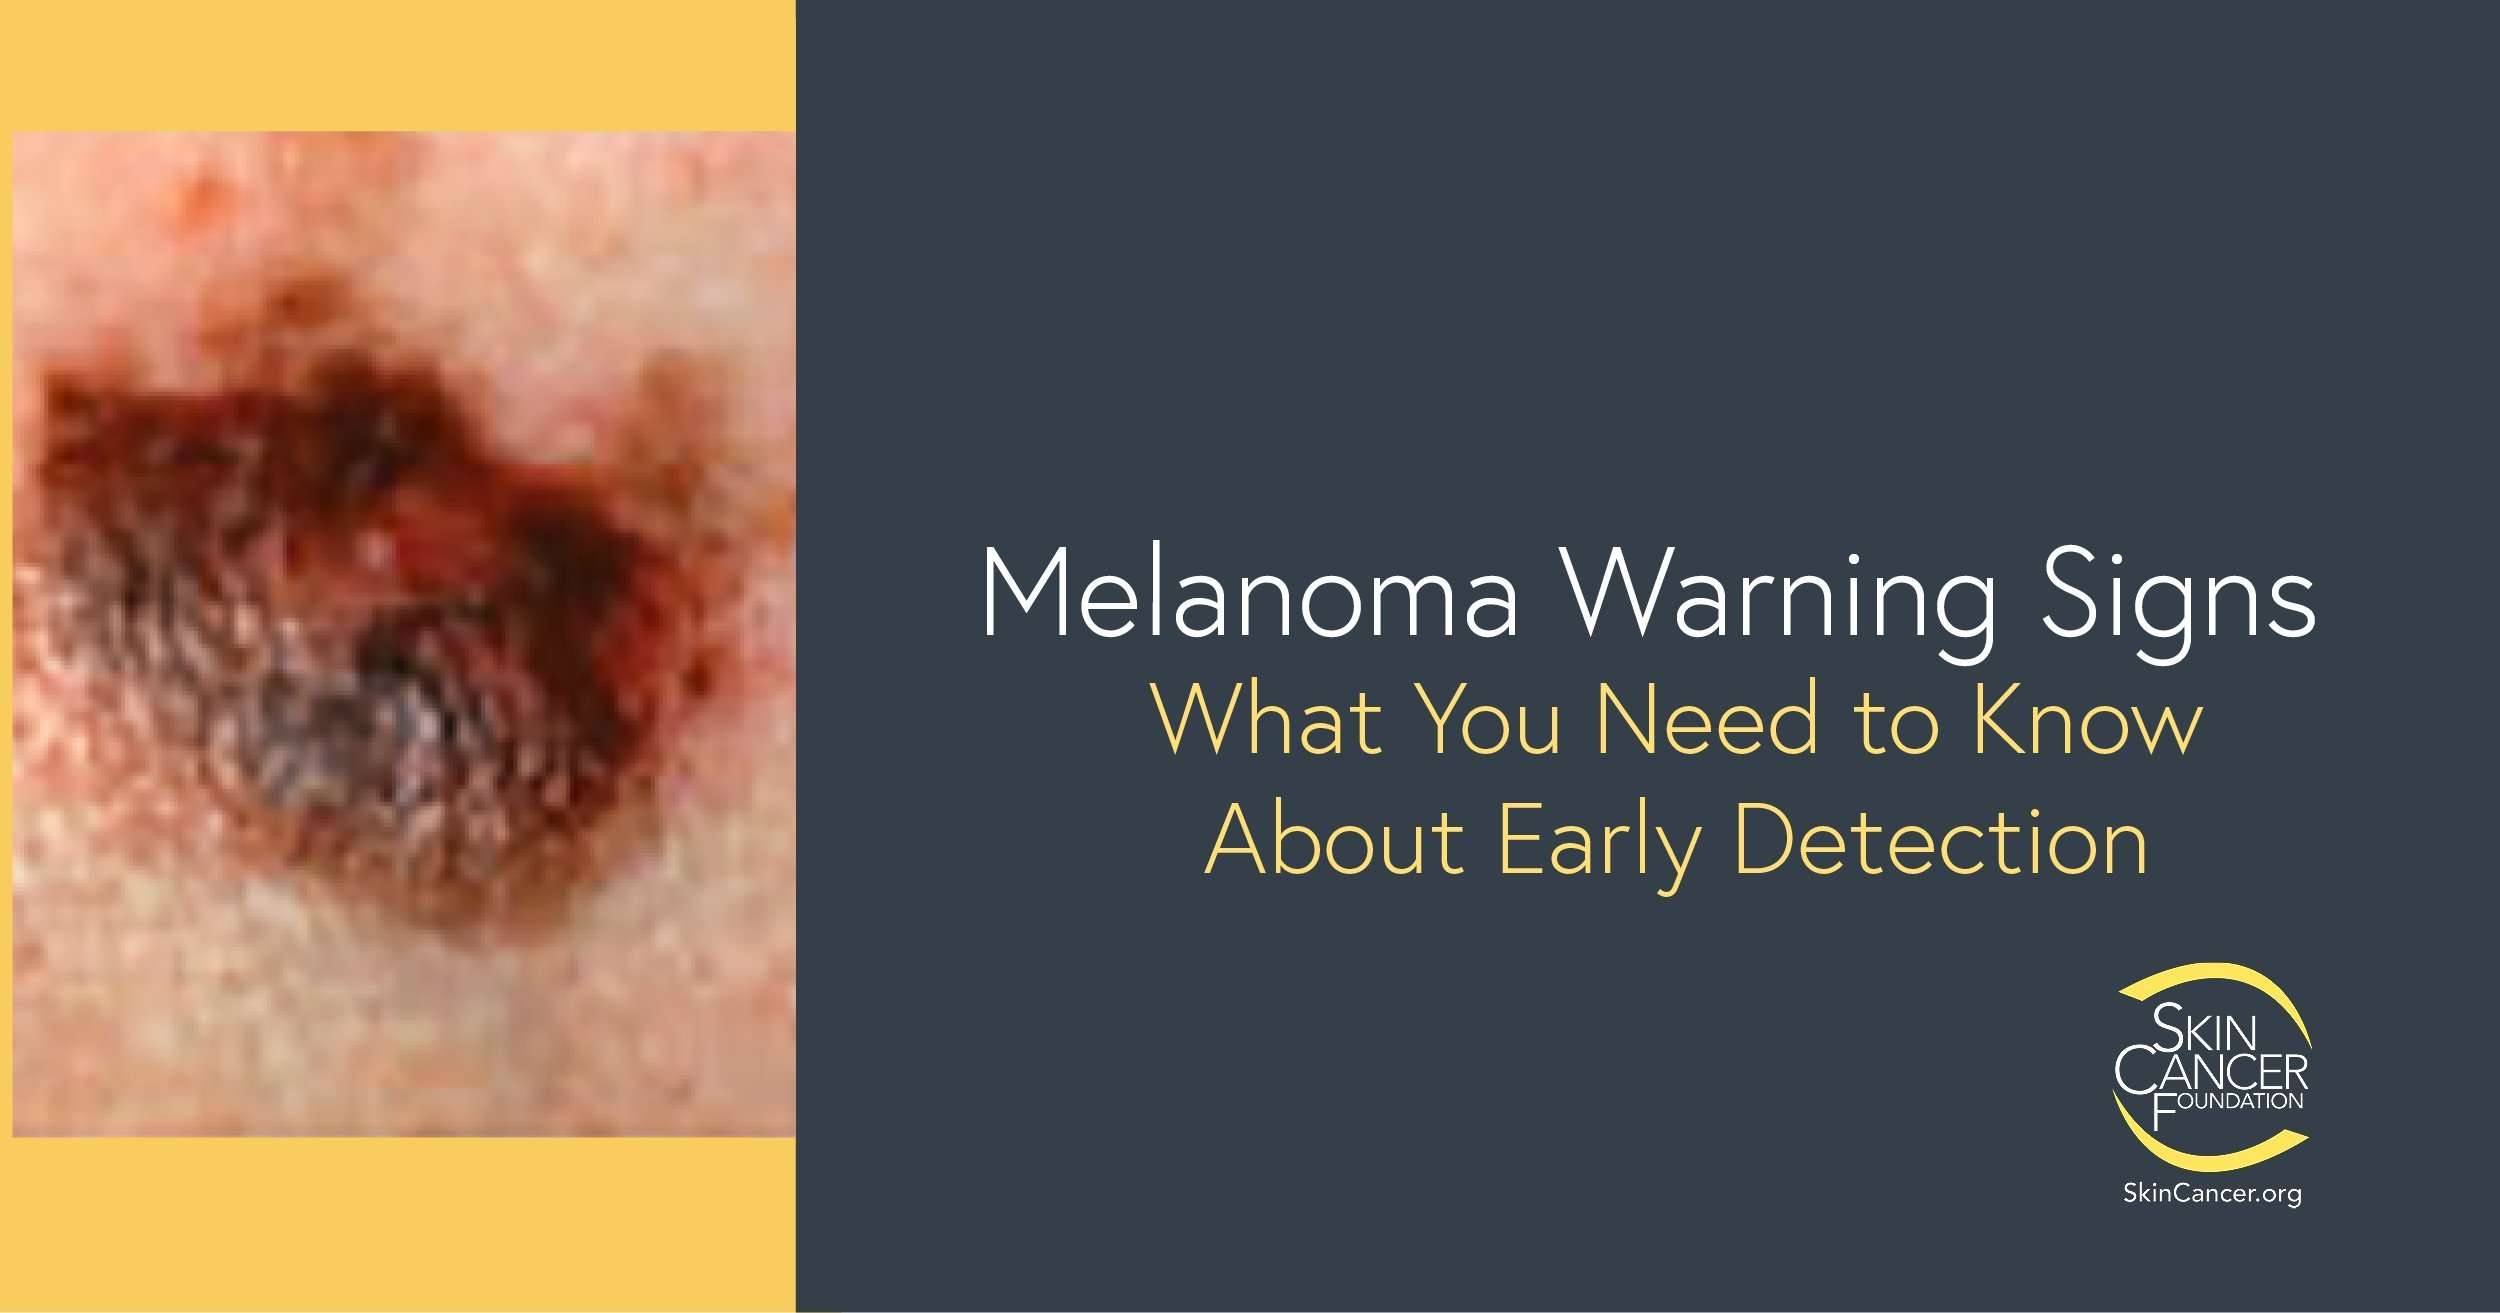 Melanoma Warning Signs and Images